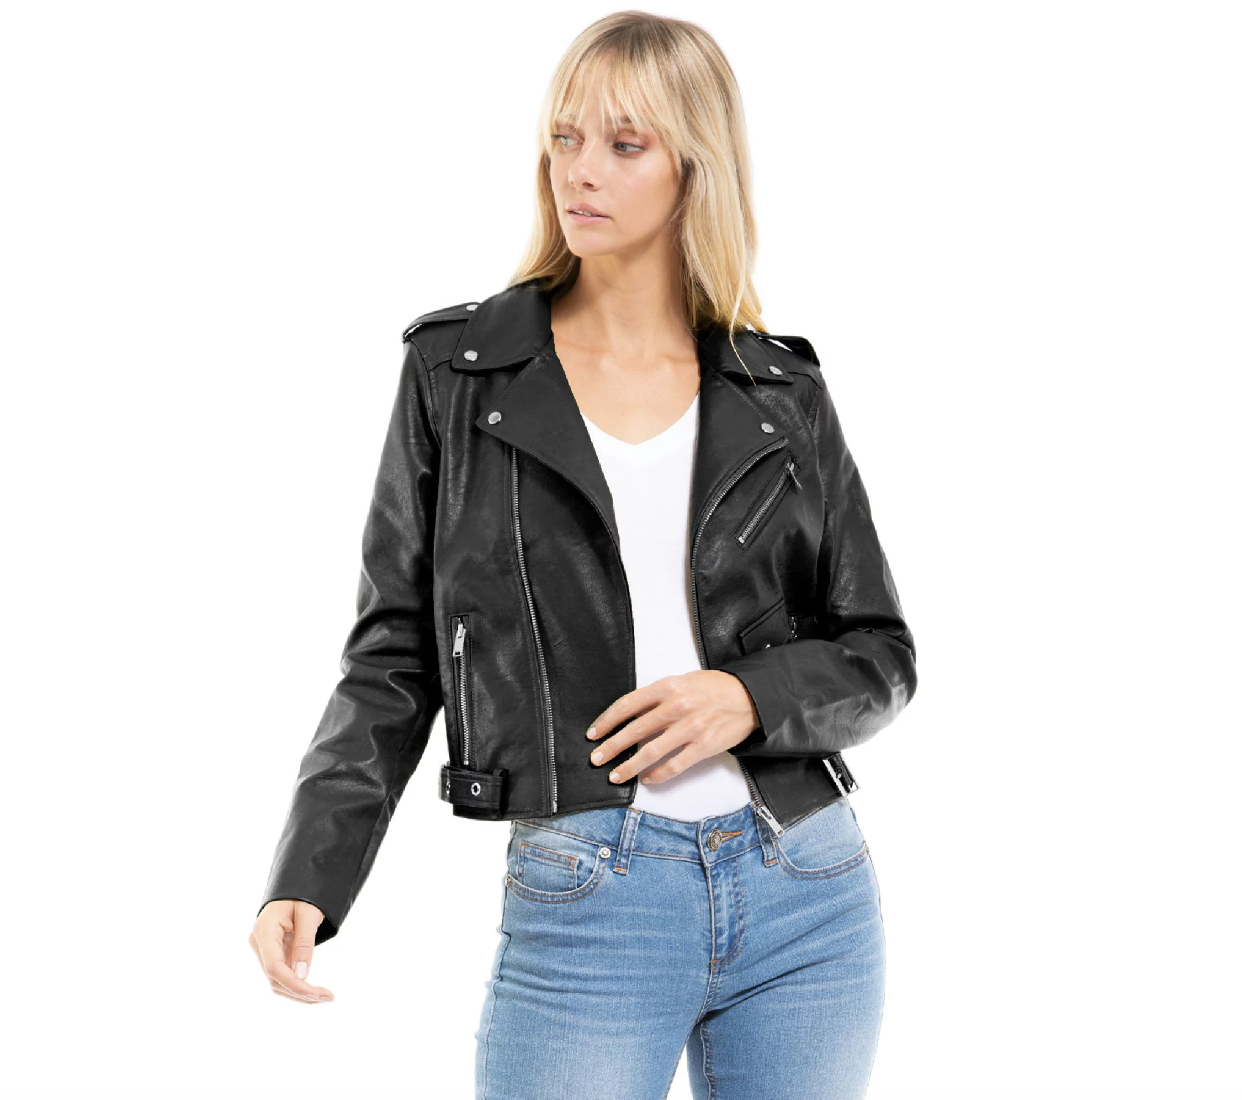 A black faux leather jacket